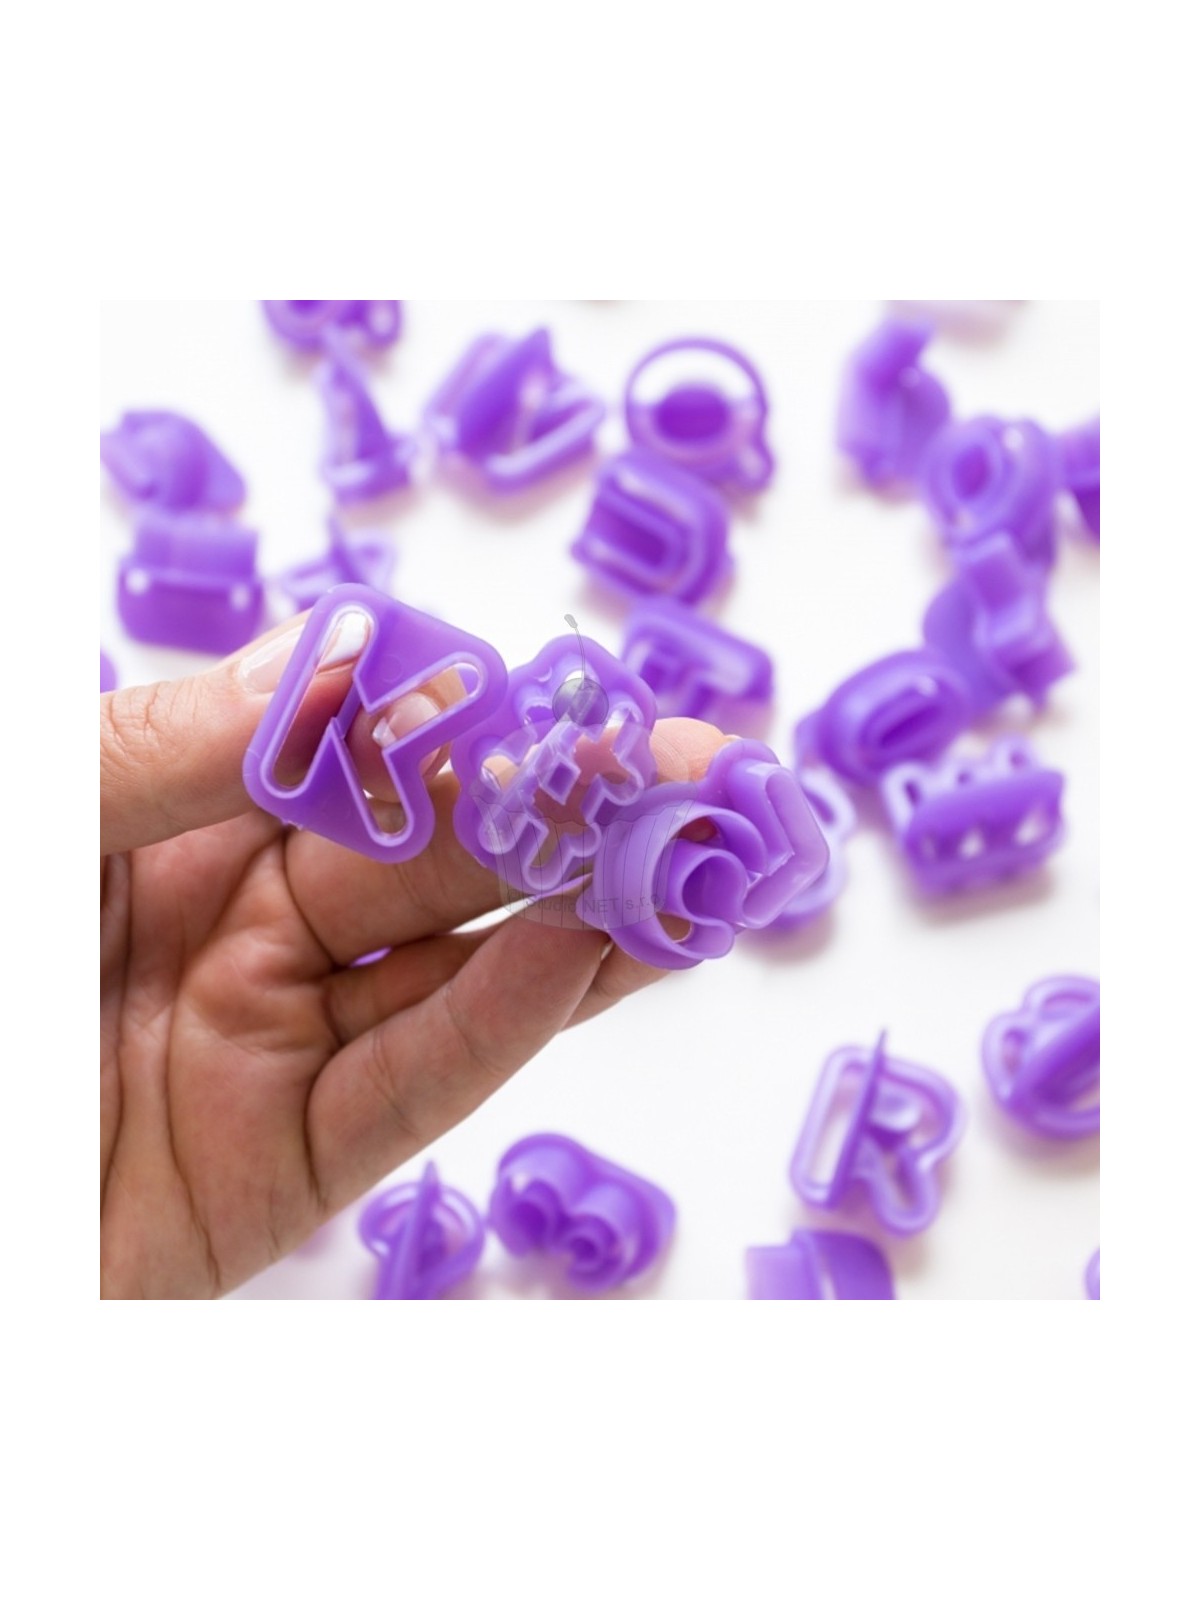 Purple alphabet - 40pcs